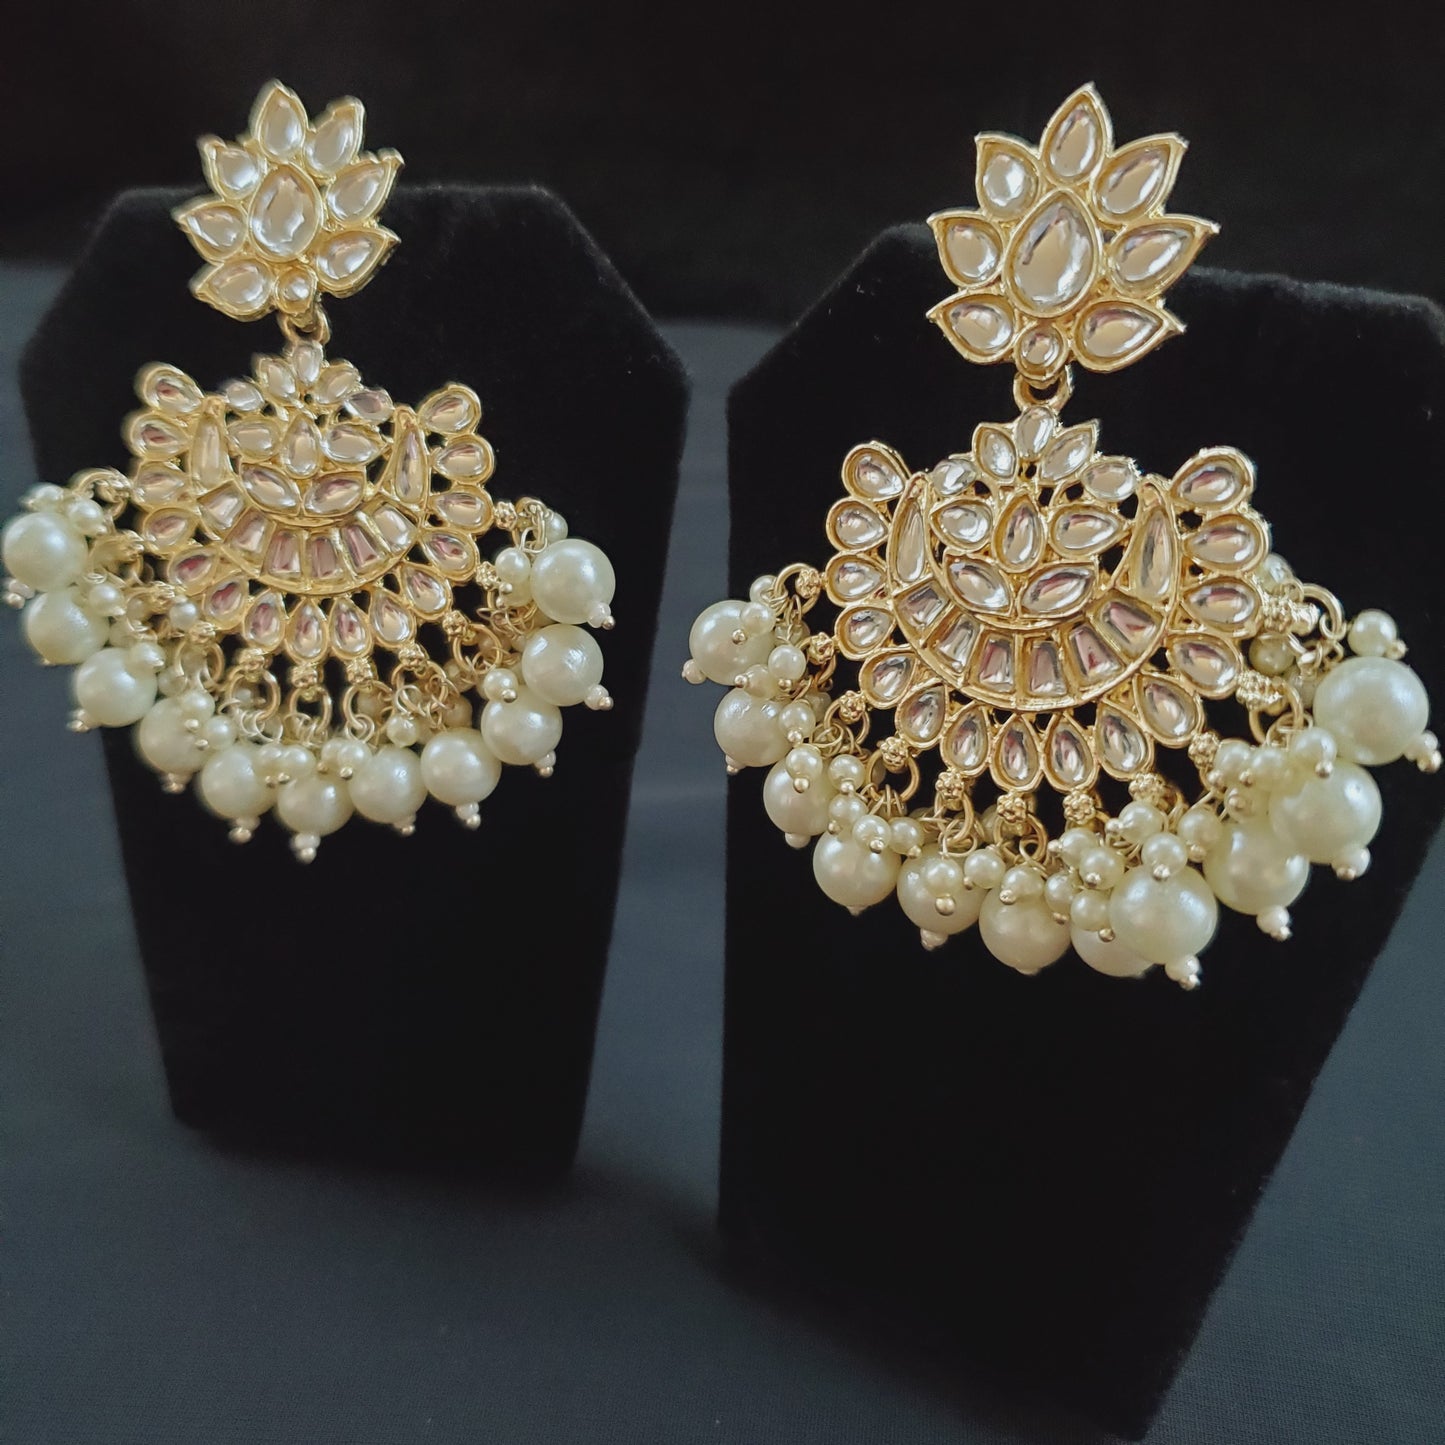 White Kundan Chandbali Earrings with Pearls